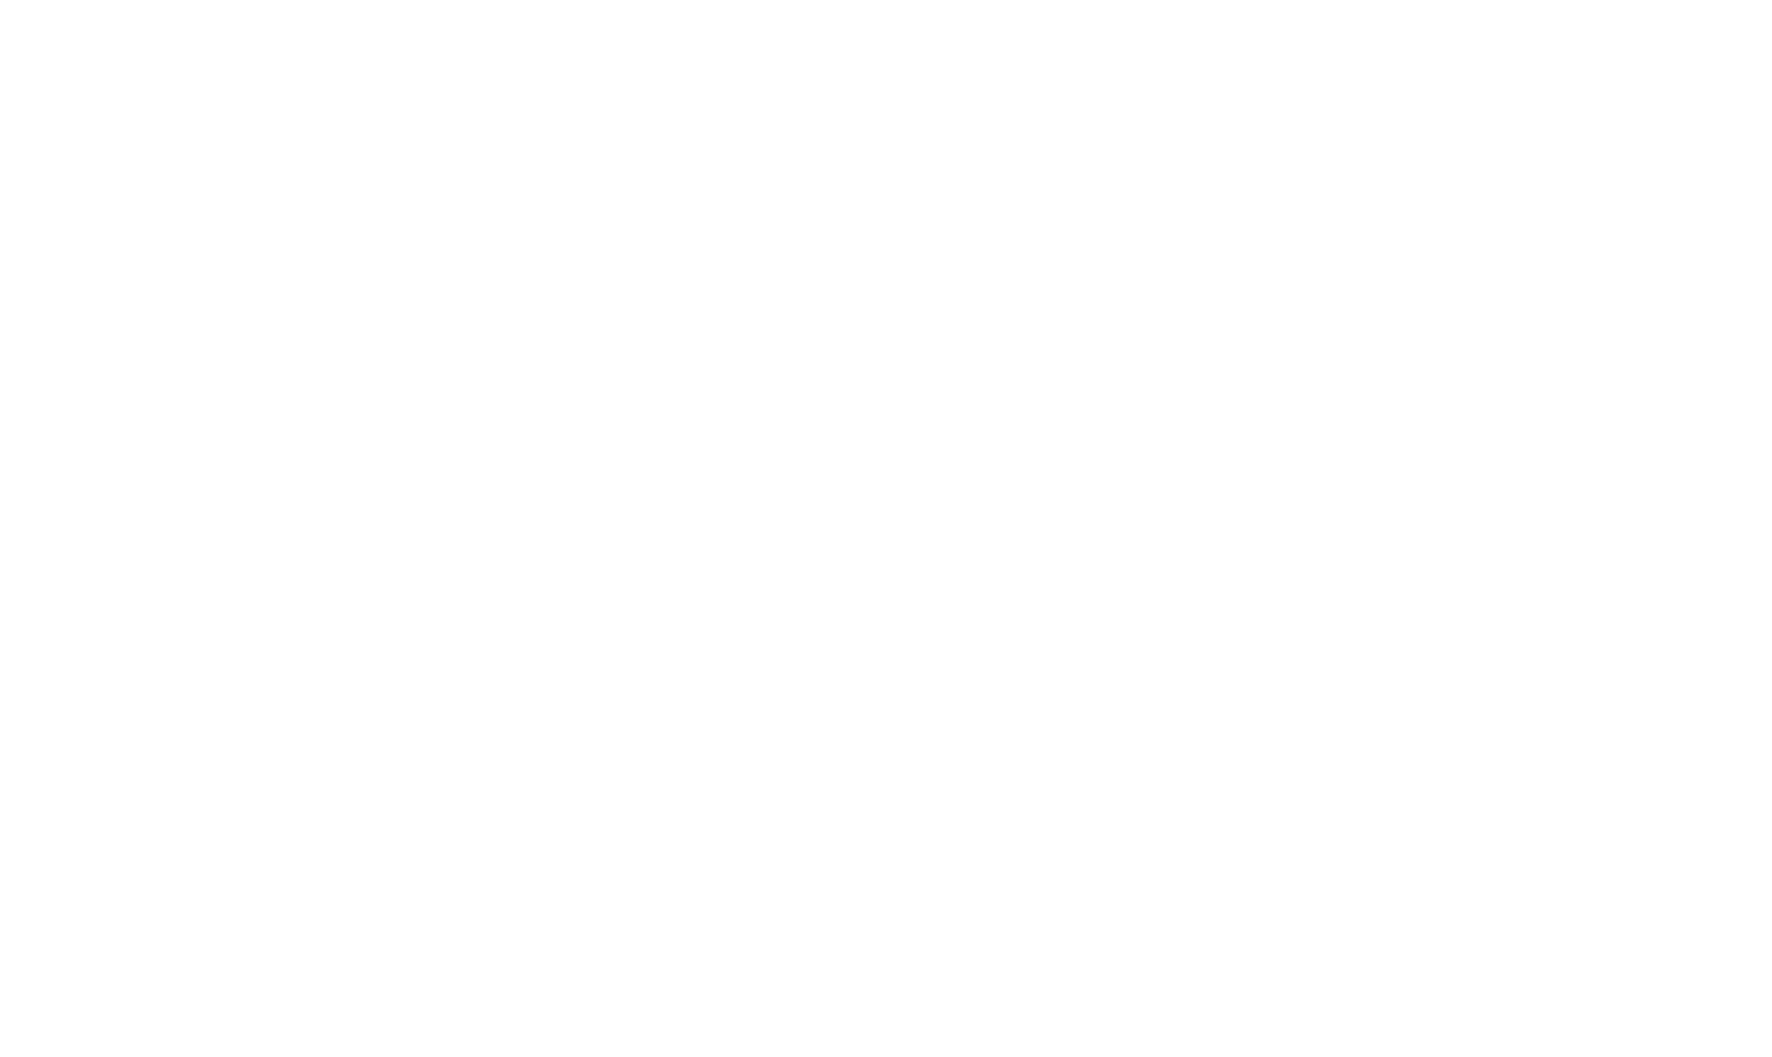 Hestía, your home!